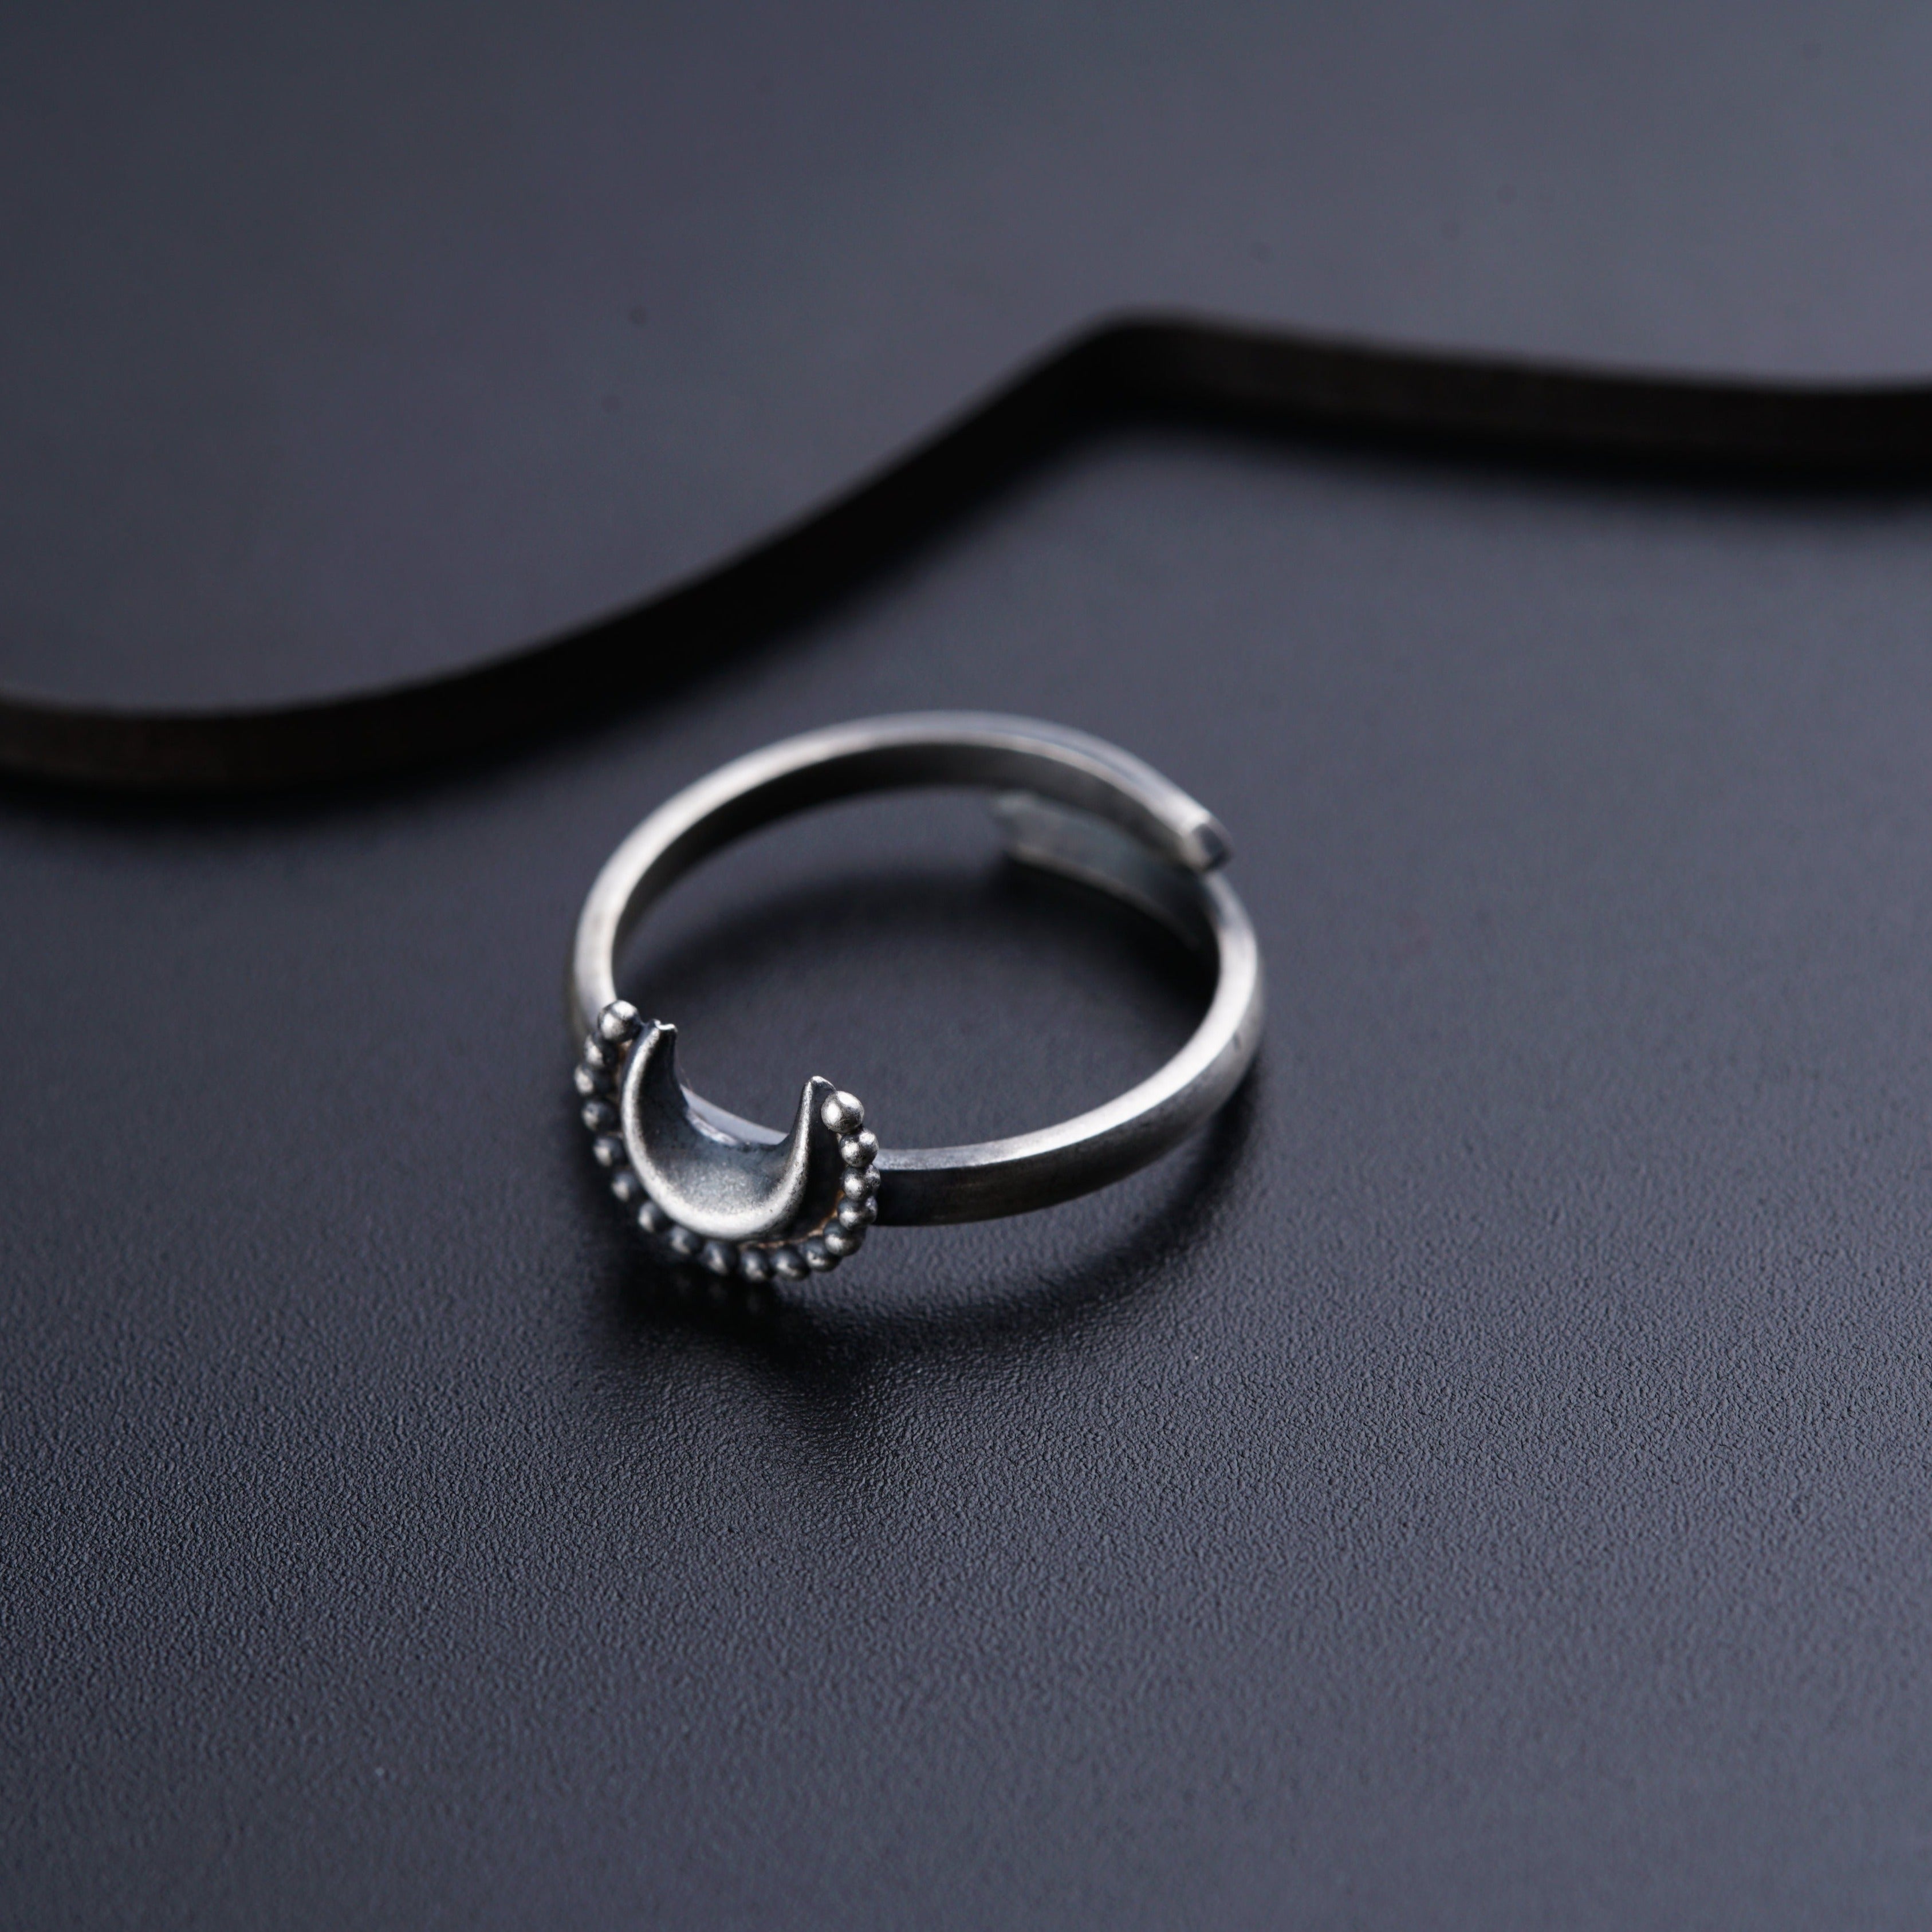 Chandrakor delicate silver ring